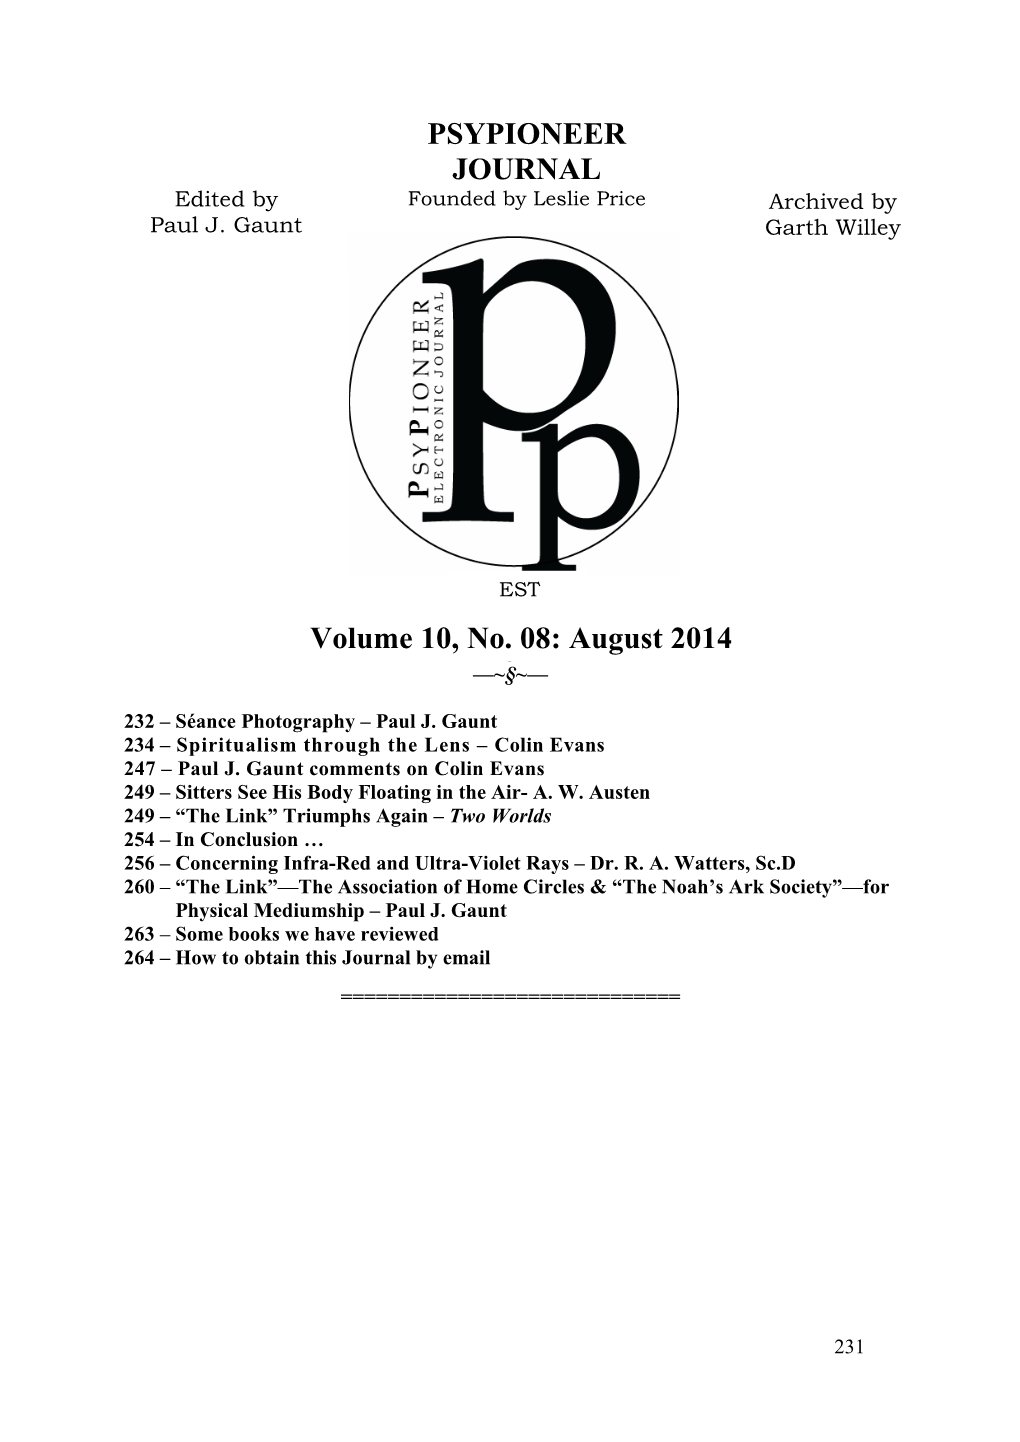 PSYPIONEER JOURNAL Volume 10, No. 08: August 2014